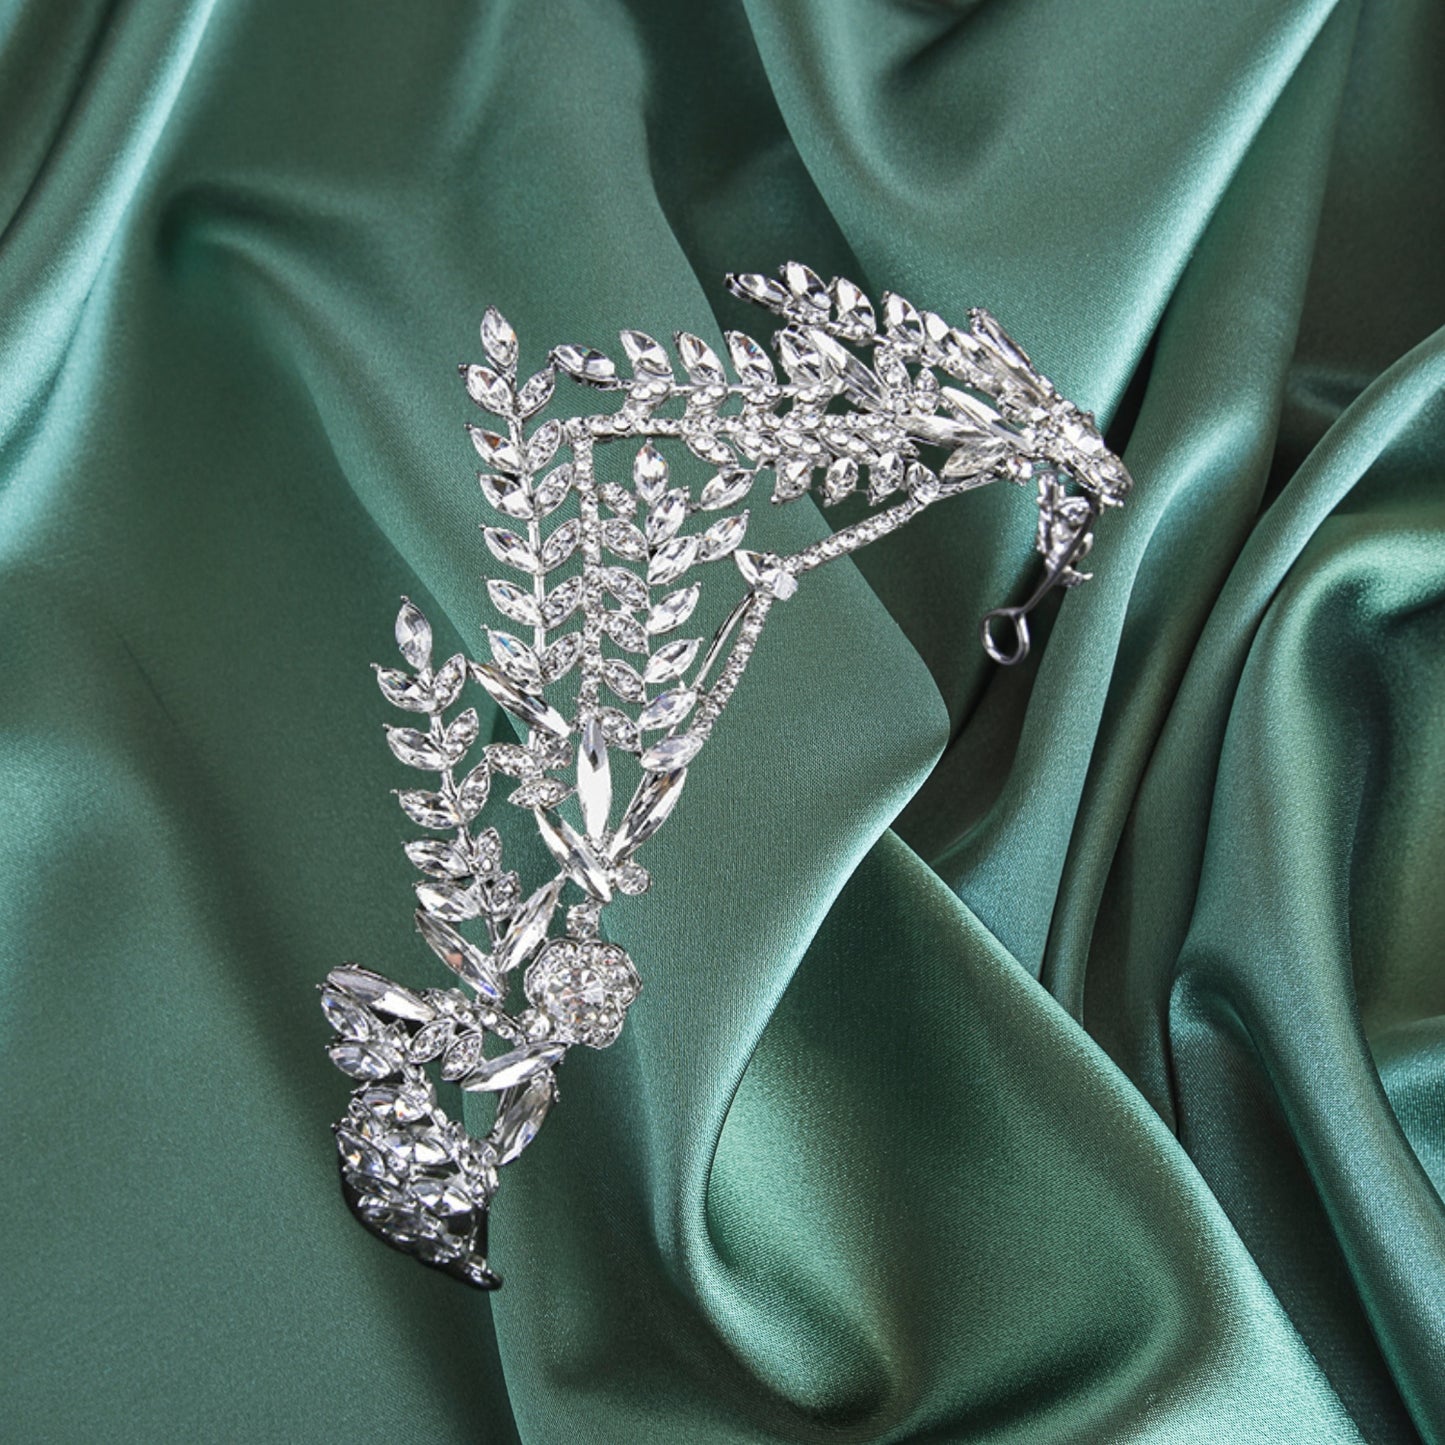 Rhineshtone Wedding Tiara for Bride & Flower Girls - Princess Tiara Headband Bridal Crown, Bridal Hair Accessories for Women, Silver